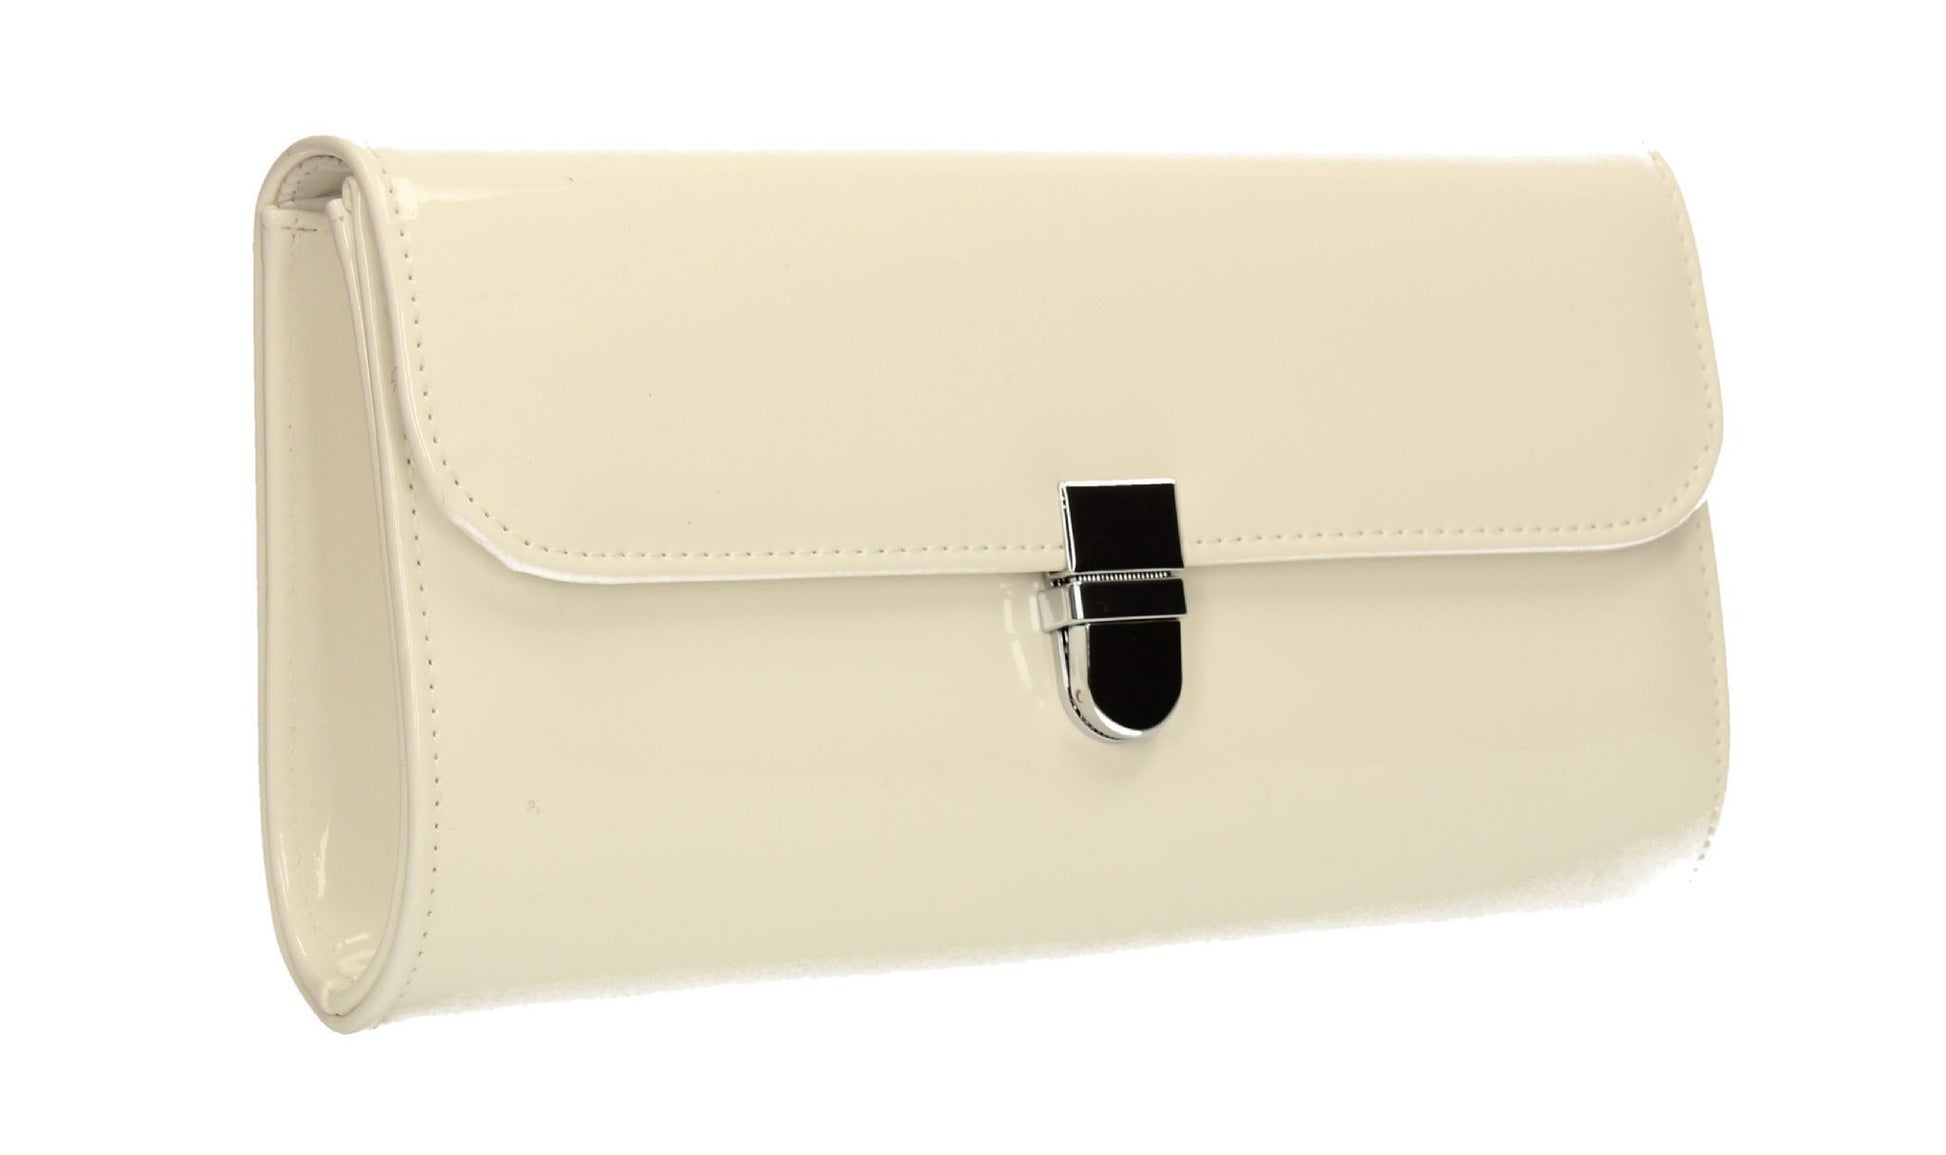 SWANKYSWANS Roxy Clutch Bag White Cute Cheap Clutch Bag For Weddings School and Work